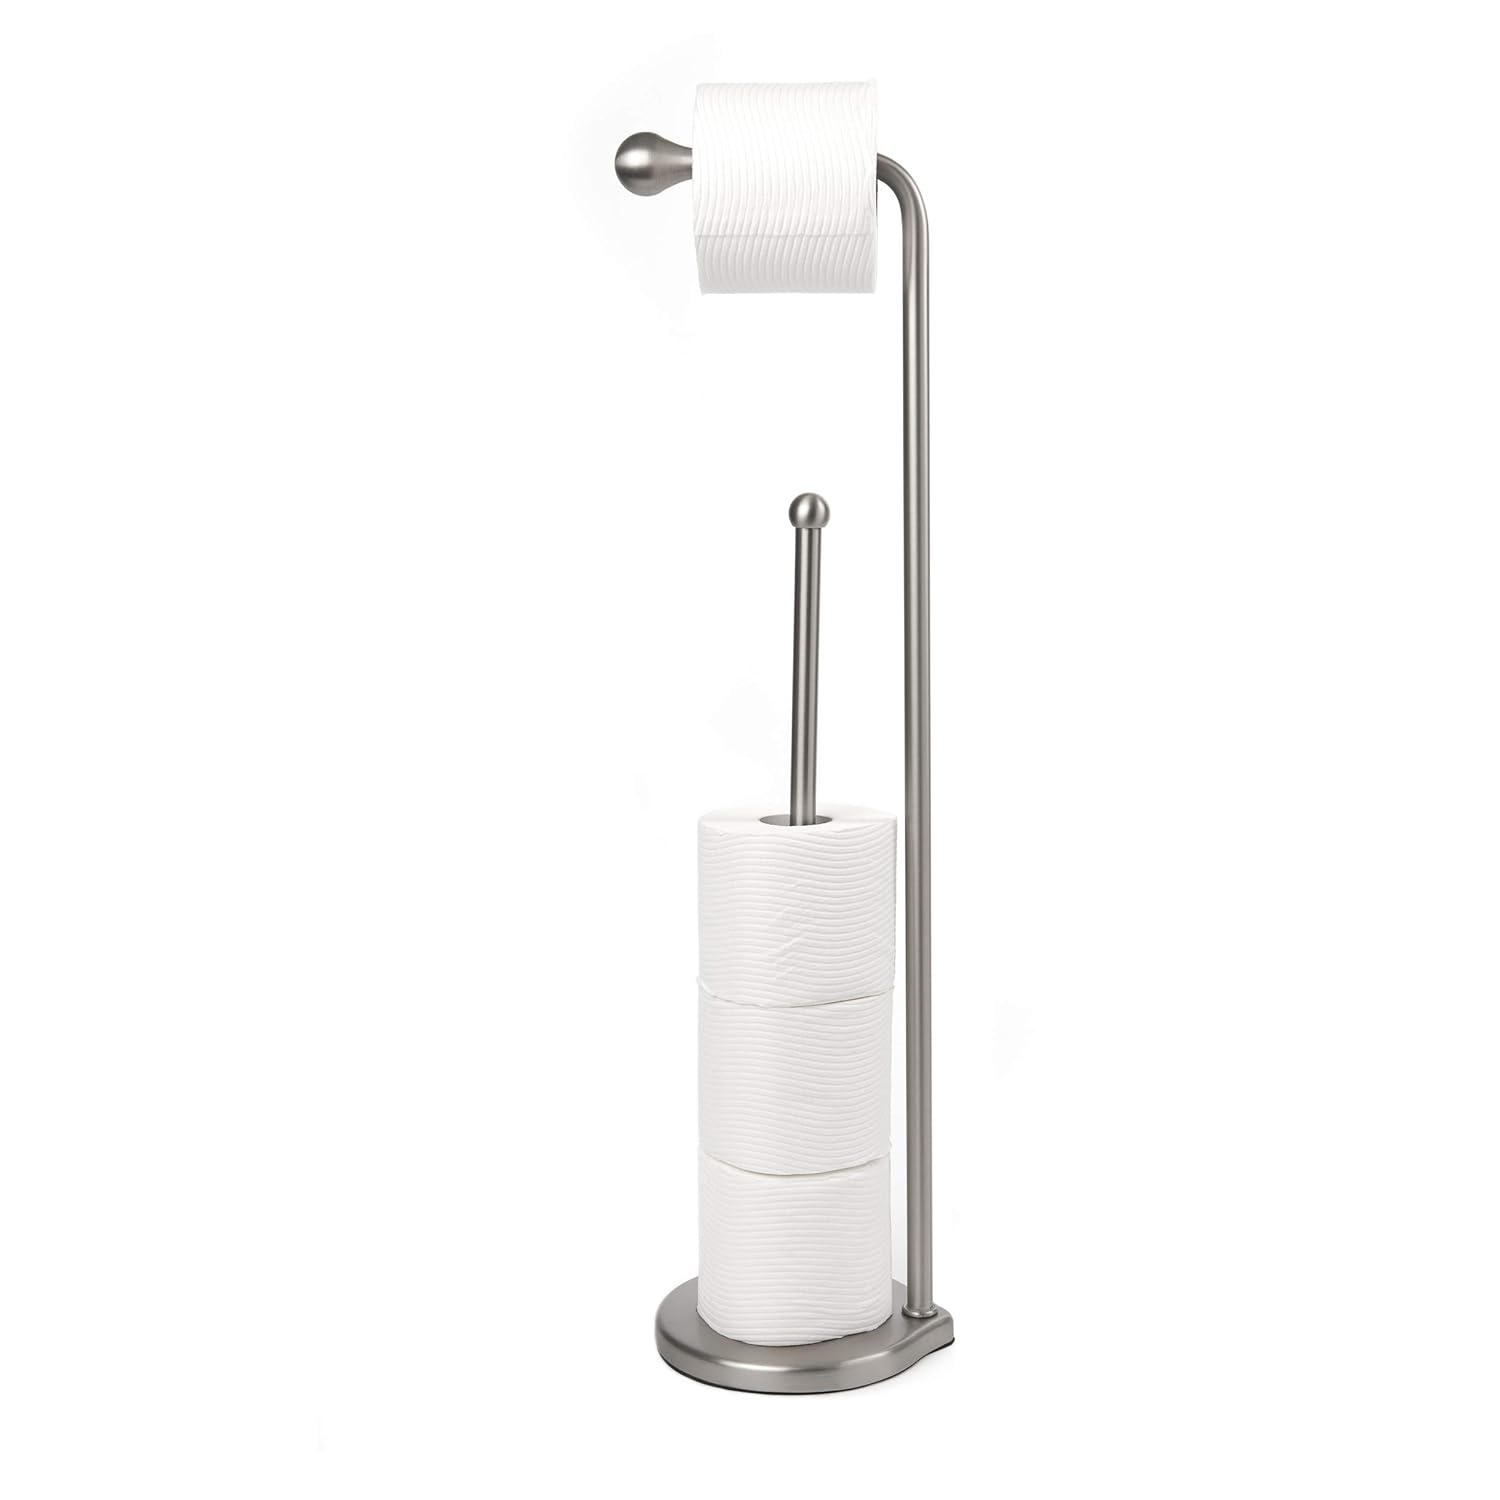 Umbra Teardrop Toilet Paper Stand – Nickel